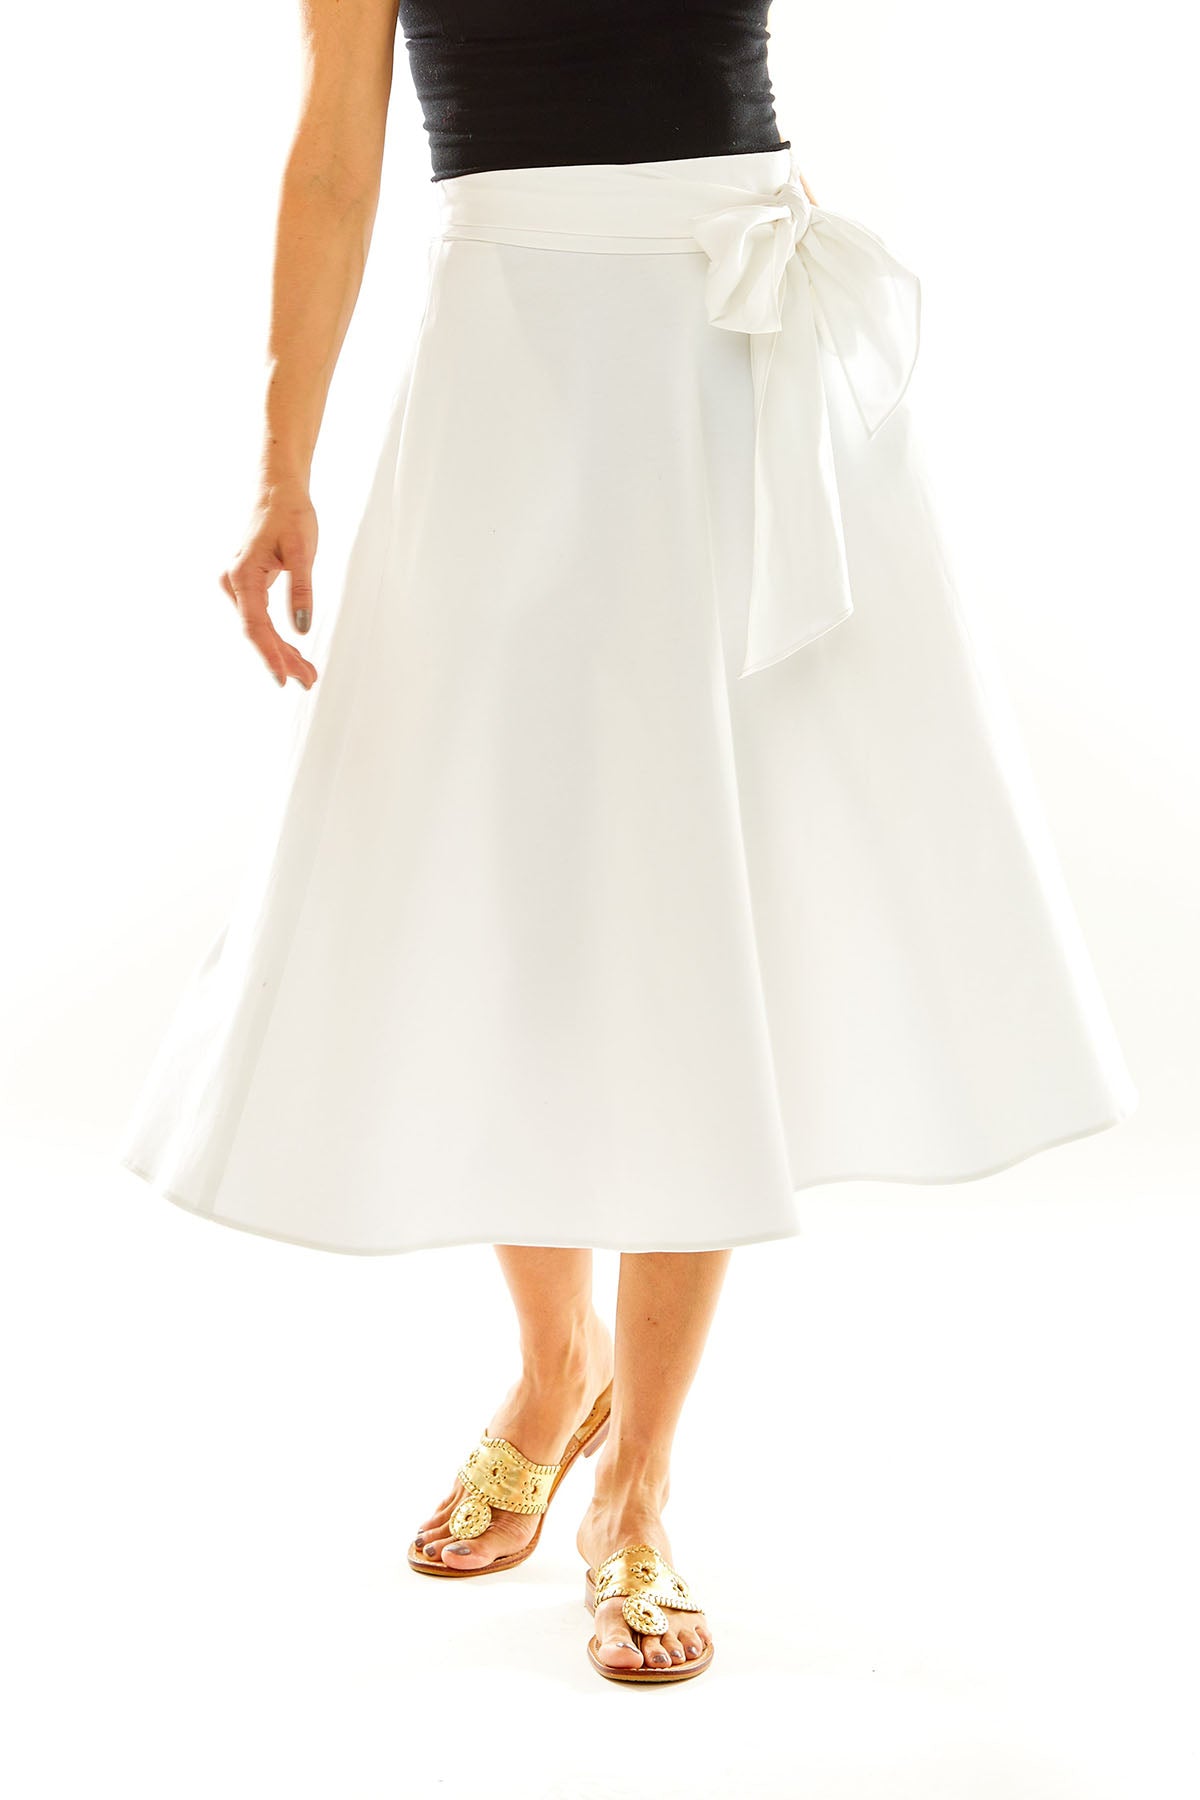 Woman in white midi skirt